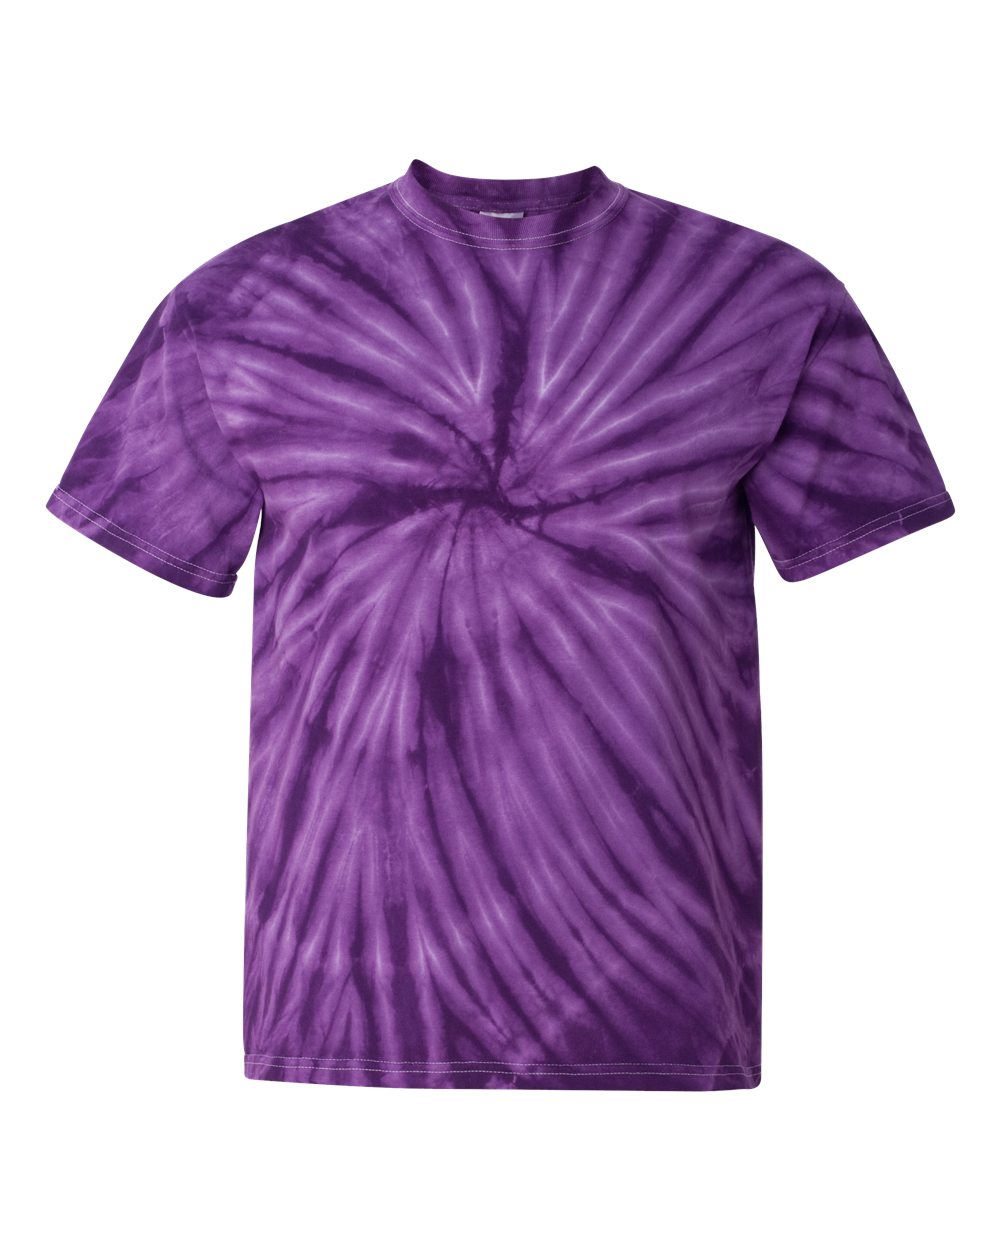 Pretreated Dyenomite 200CY Cyclone Pinwheel Tie-Dyed T-Shirt